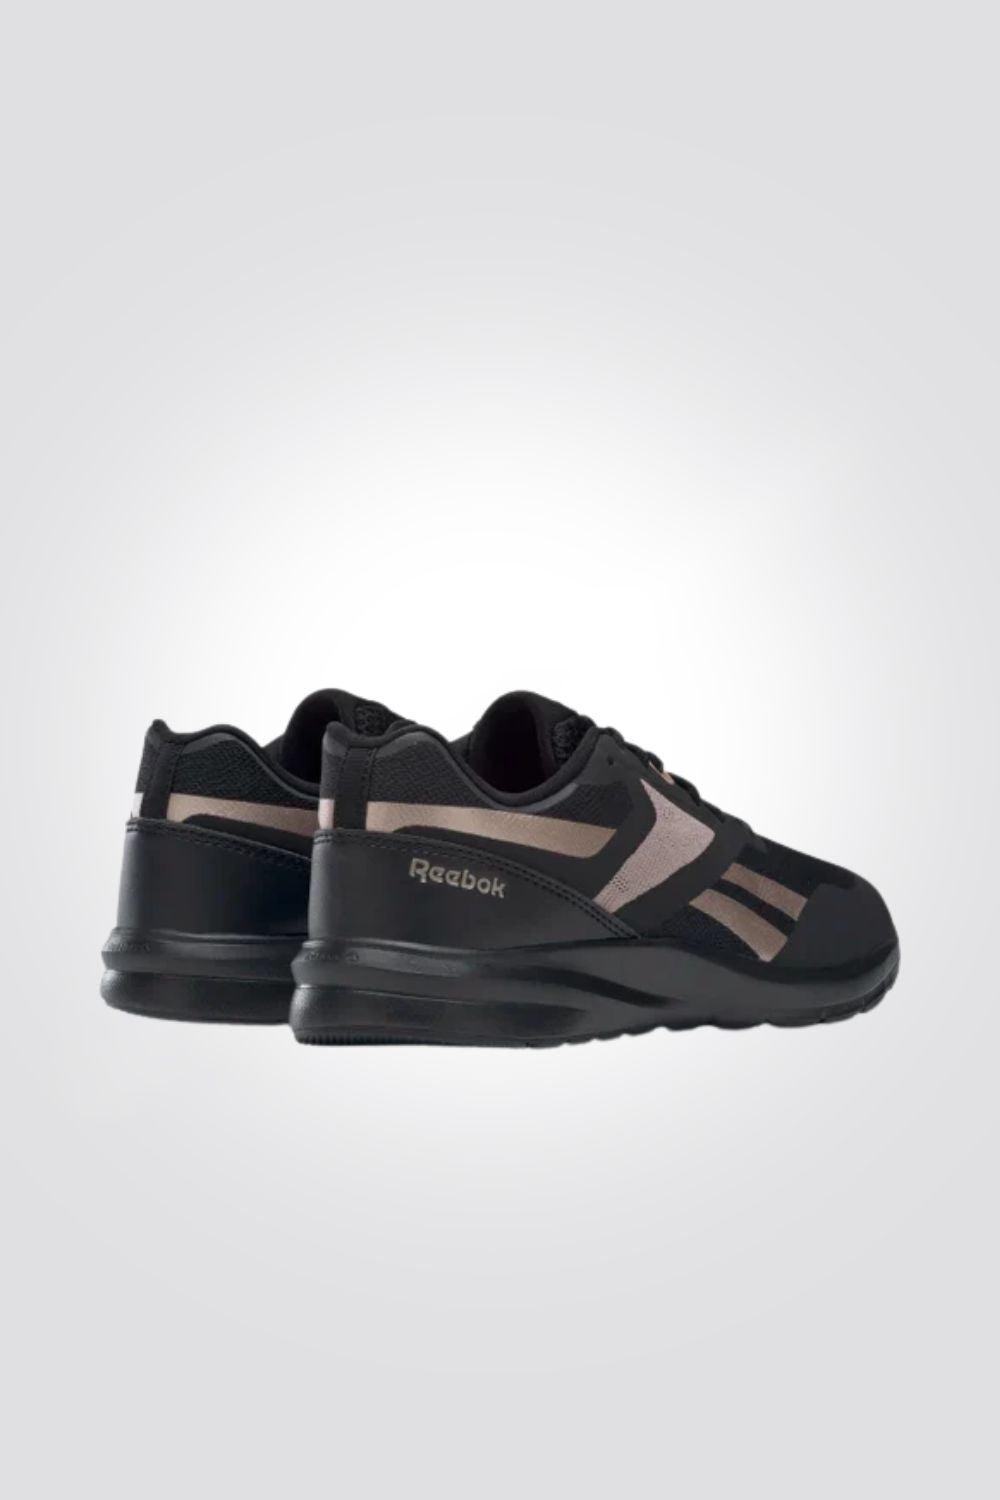 REEBOK - נעל ספורט לנשים RUNNER 4.0 בצבע שחור ורוז - MASHBIR//365